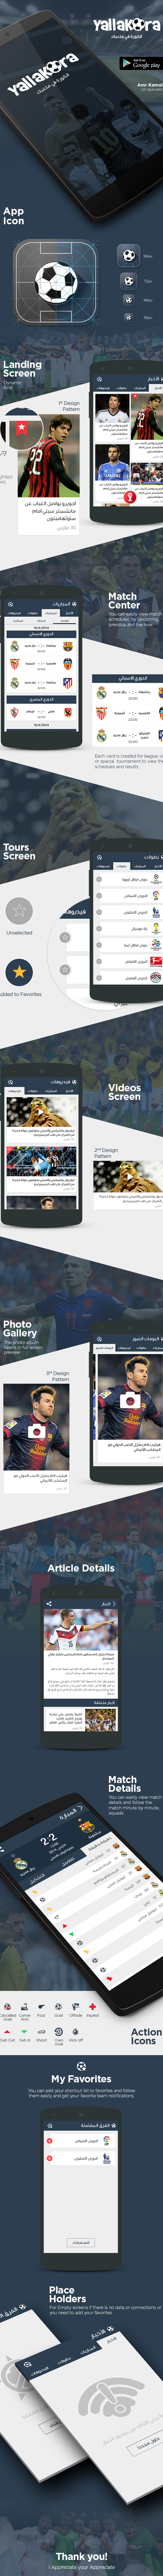 Yallakora football mobile app android linkonline Amr Kamal world cup soccer